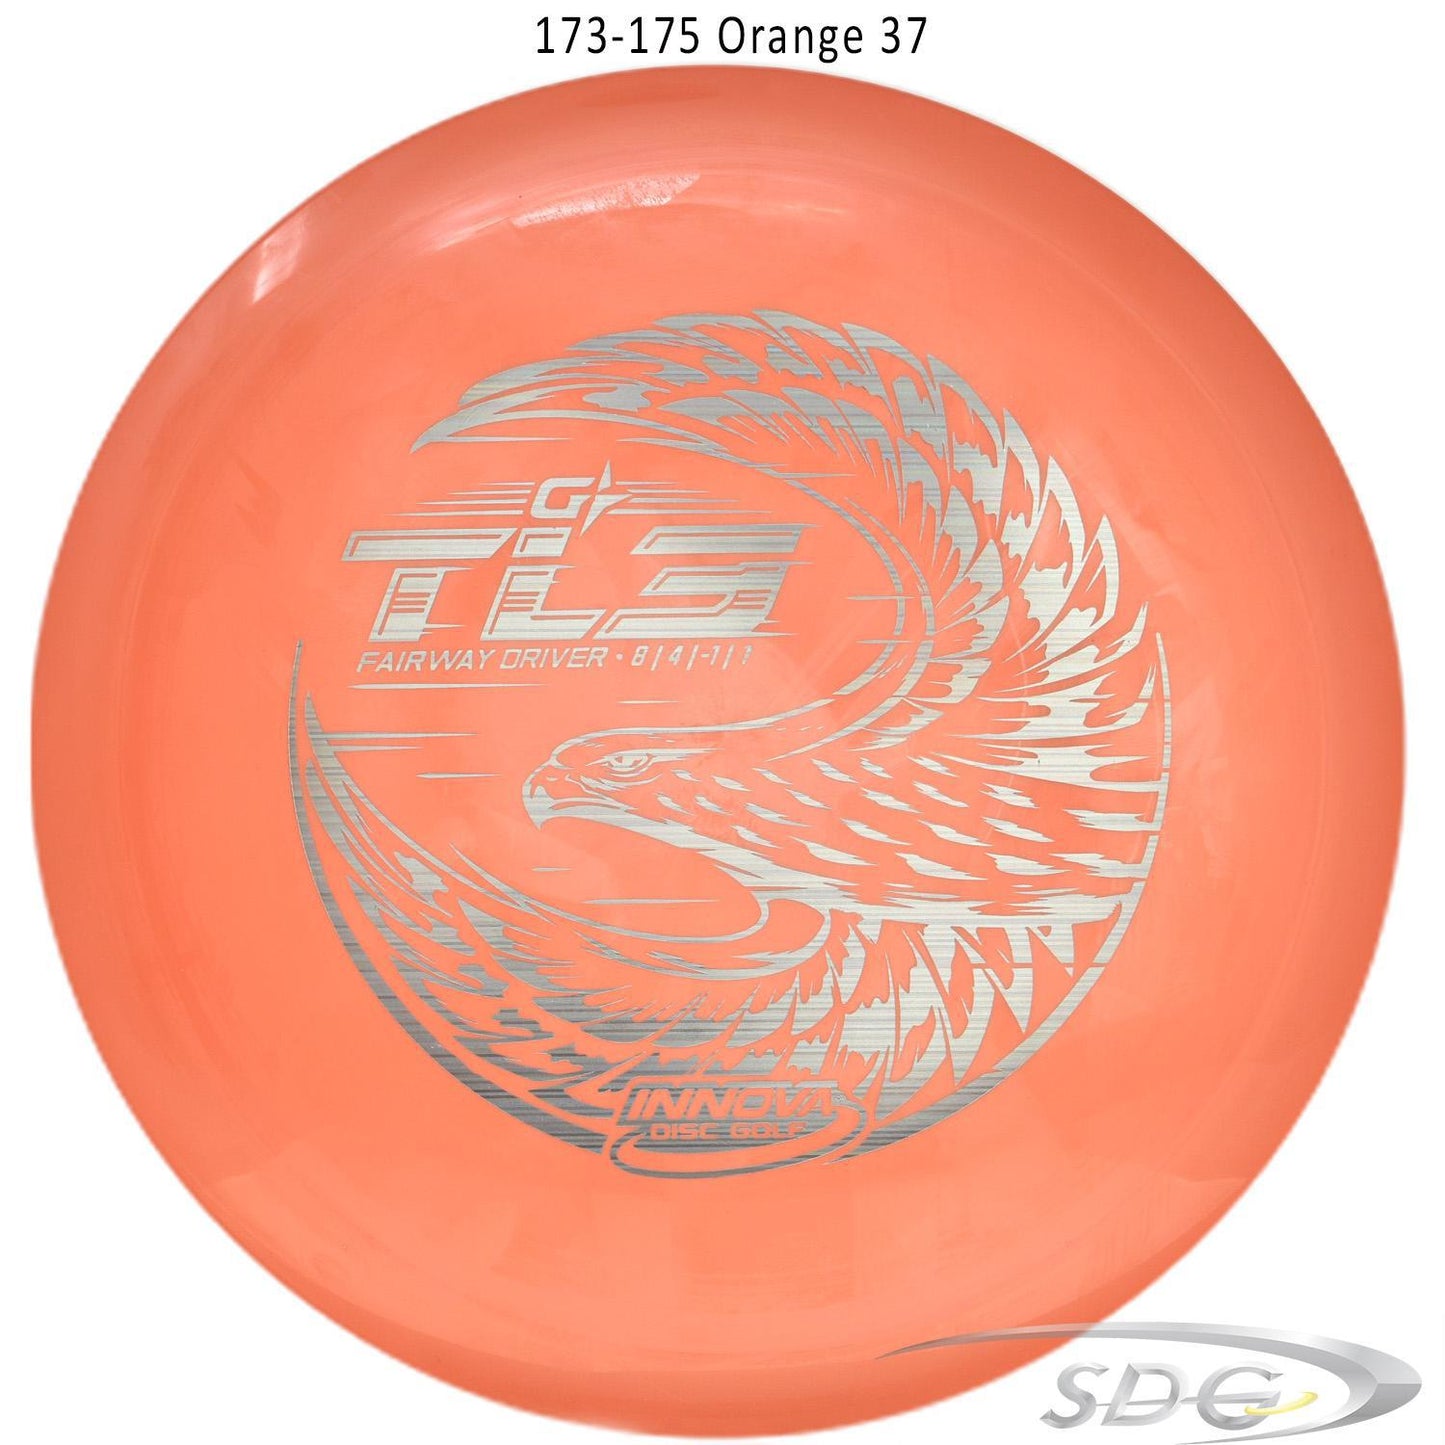 innova-gstar-tl3-disc-golf-fairway-driver 173-175 Orange 37 